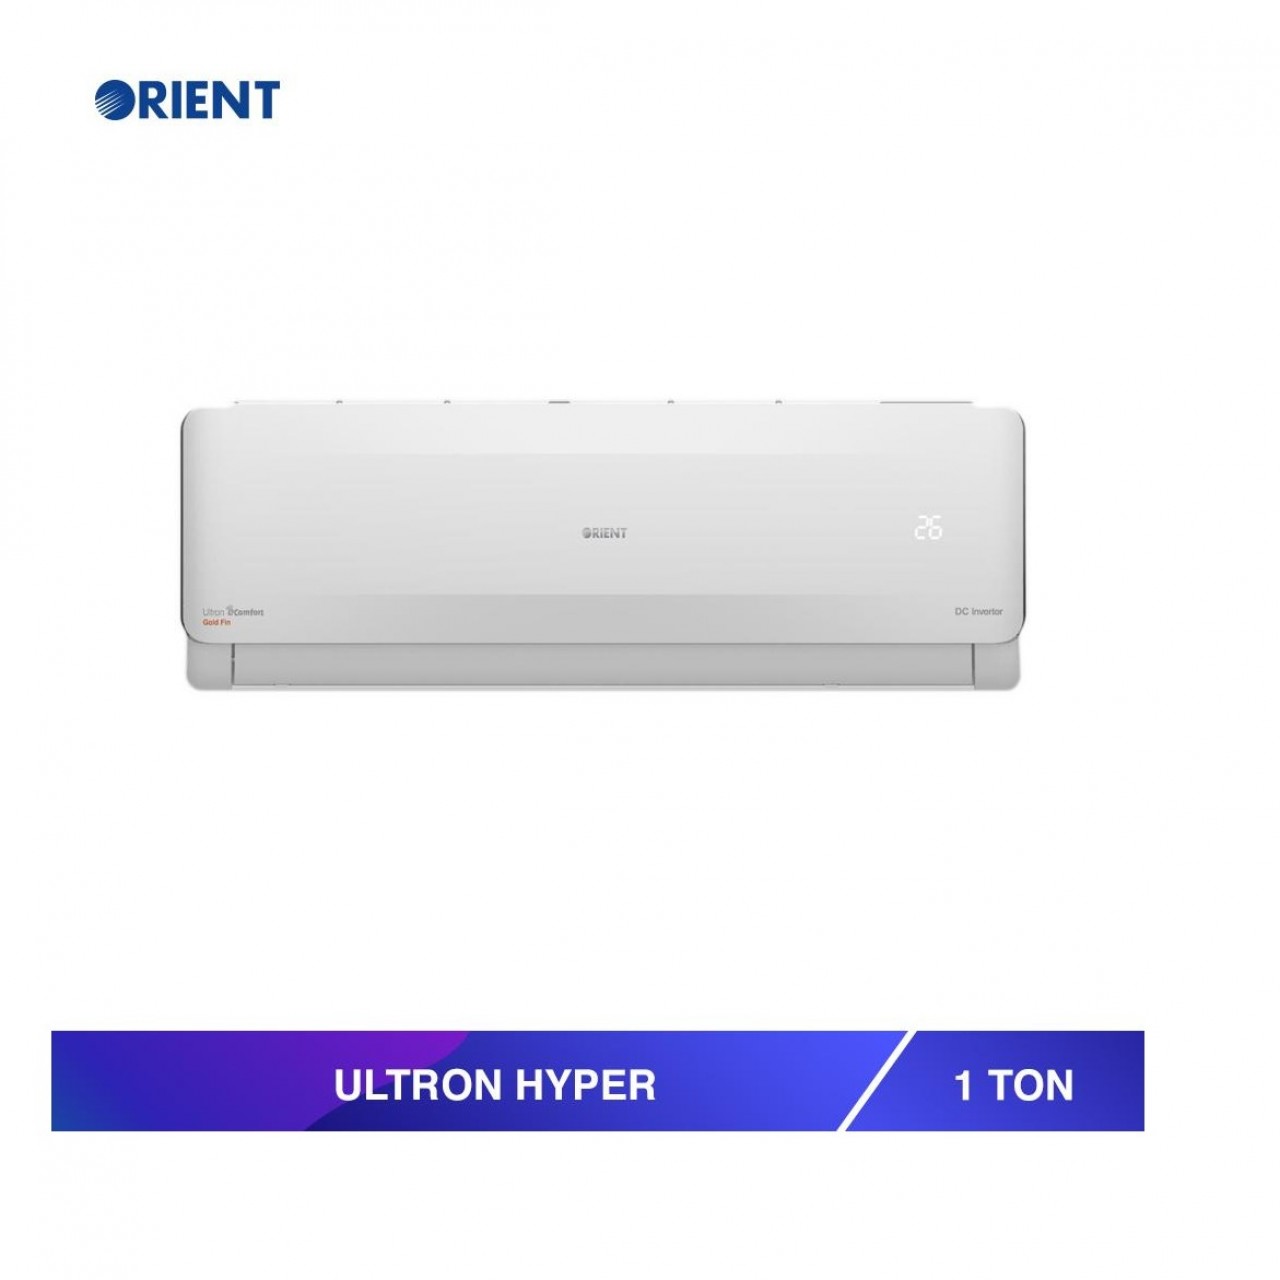 Orient DC Inverter Air Conditioner Ultron 12g hyper – 1 Ton – Online Control – E Comfort Feature